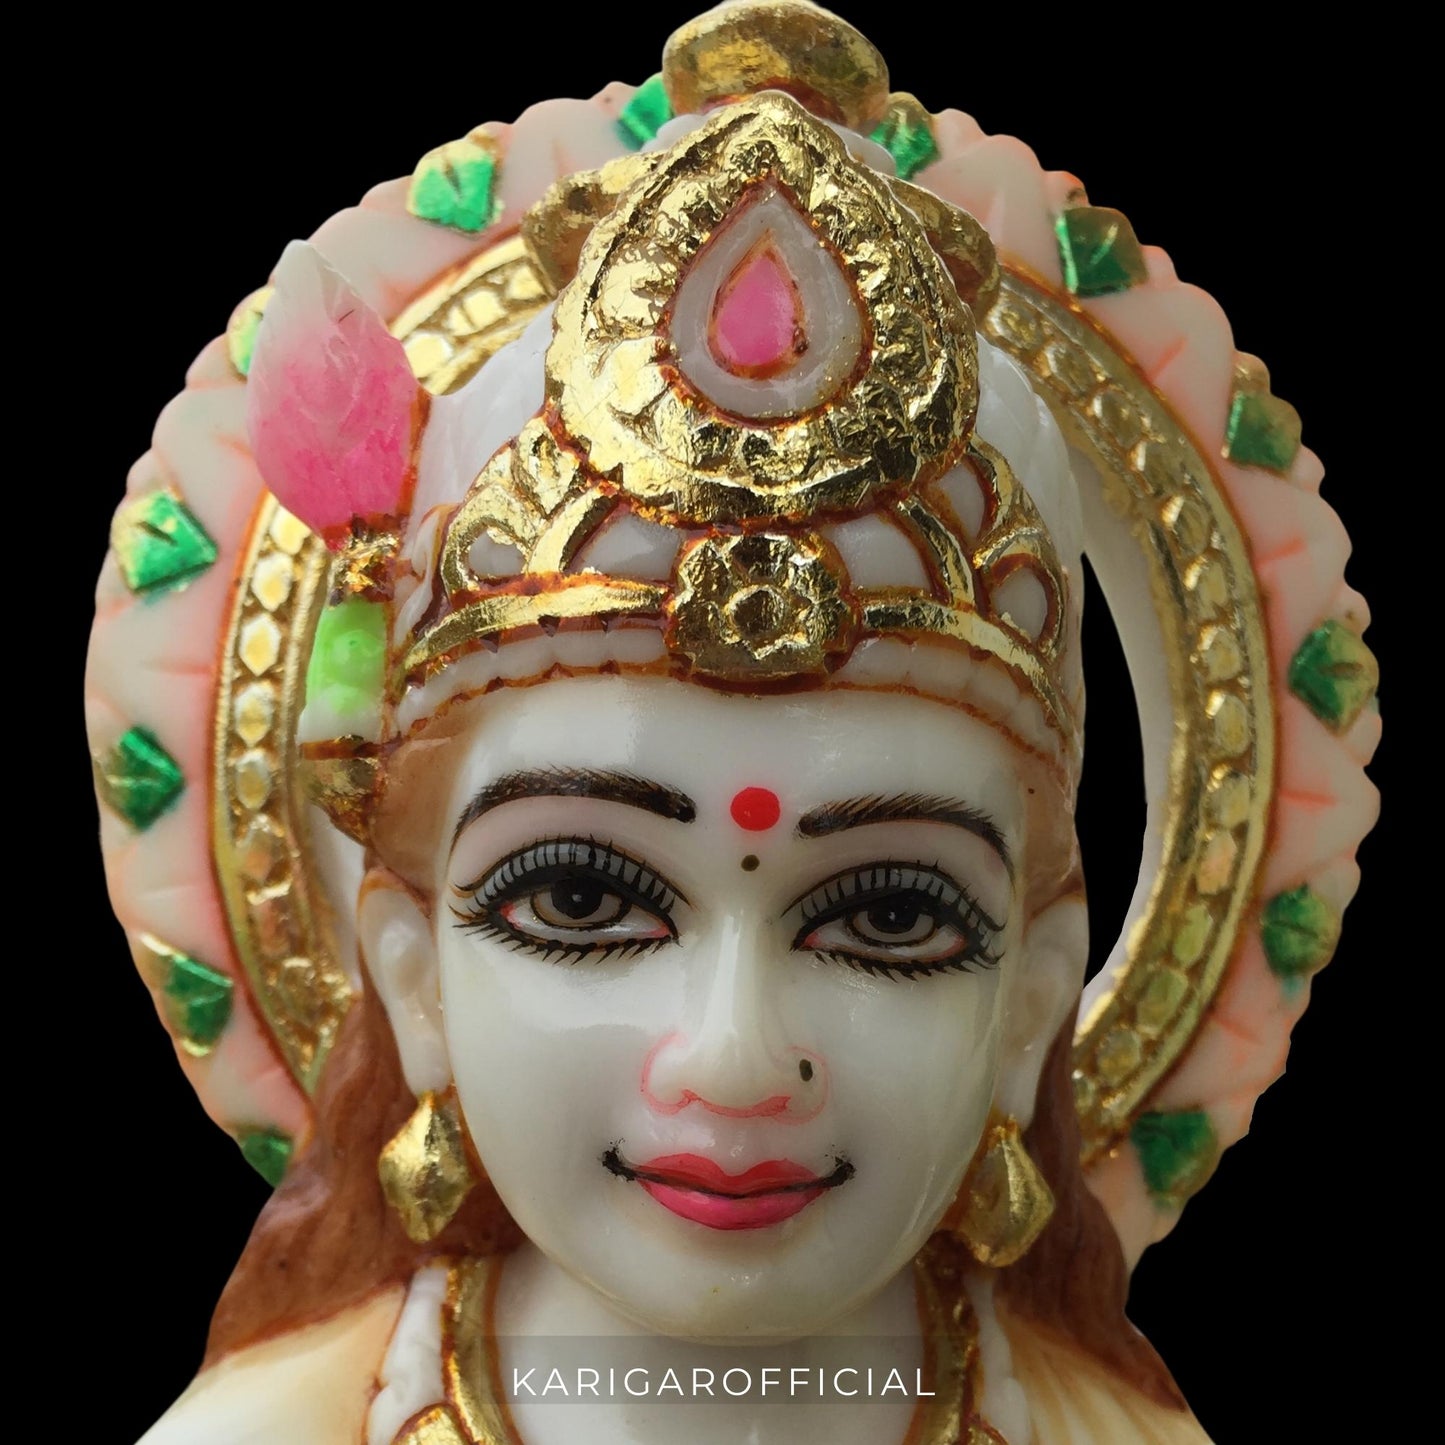 Lakshmi statue 12 inches Marble goddess Indian goddess Big Lakshmi Statue, Big Marble Figurine of Laxmi, goddess of wealth, Immortal nectar, Laxmi idol, Lakshmi sculpture Home decor Anniversary gifts